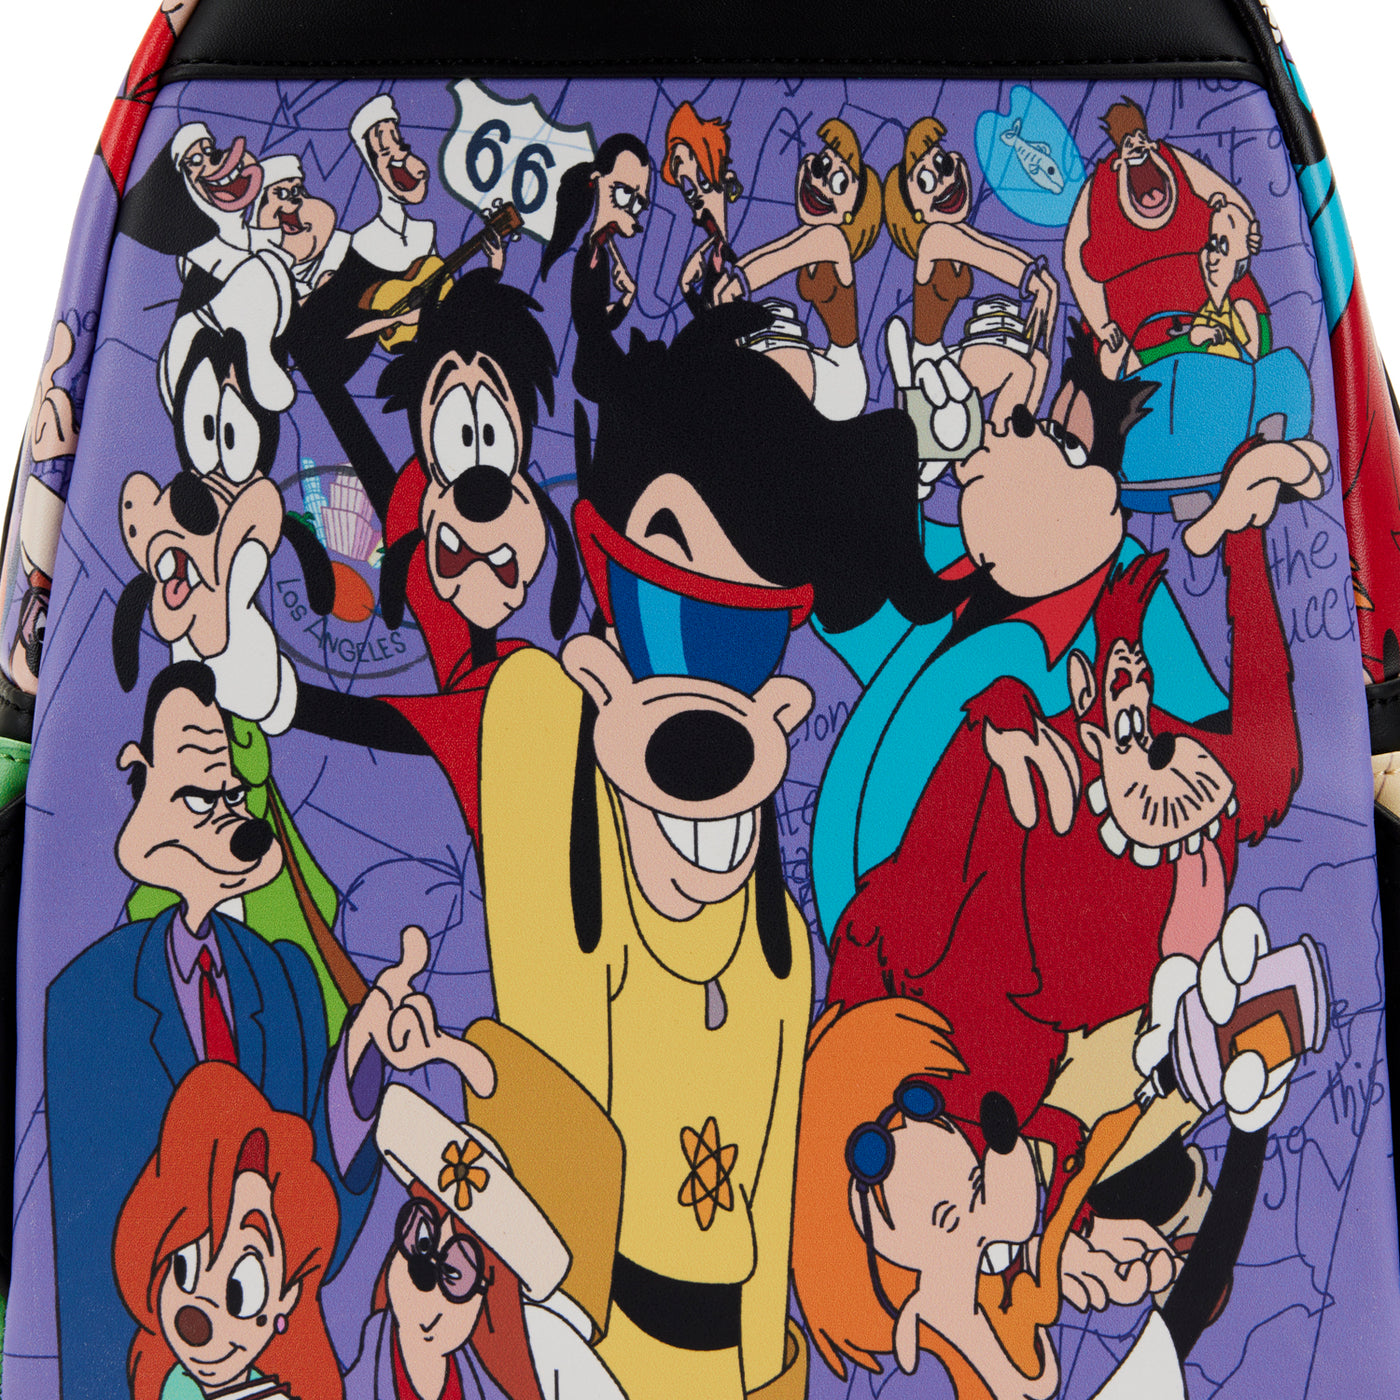 Disney Goofy Movie Collage Mini Backpack